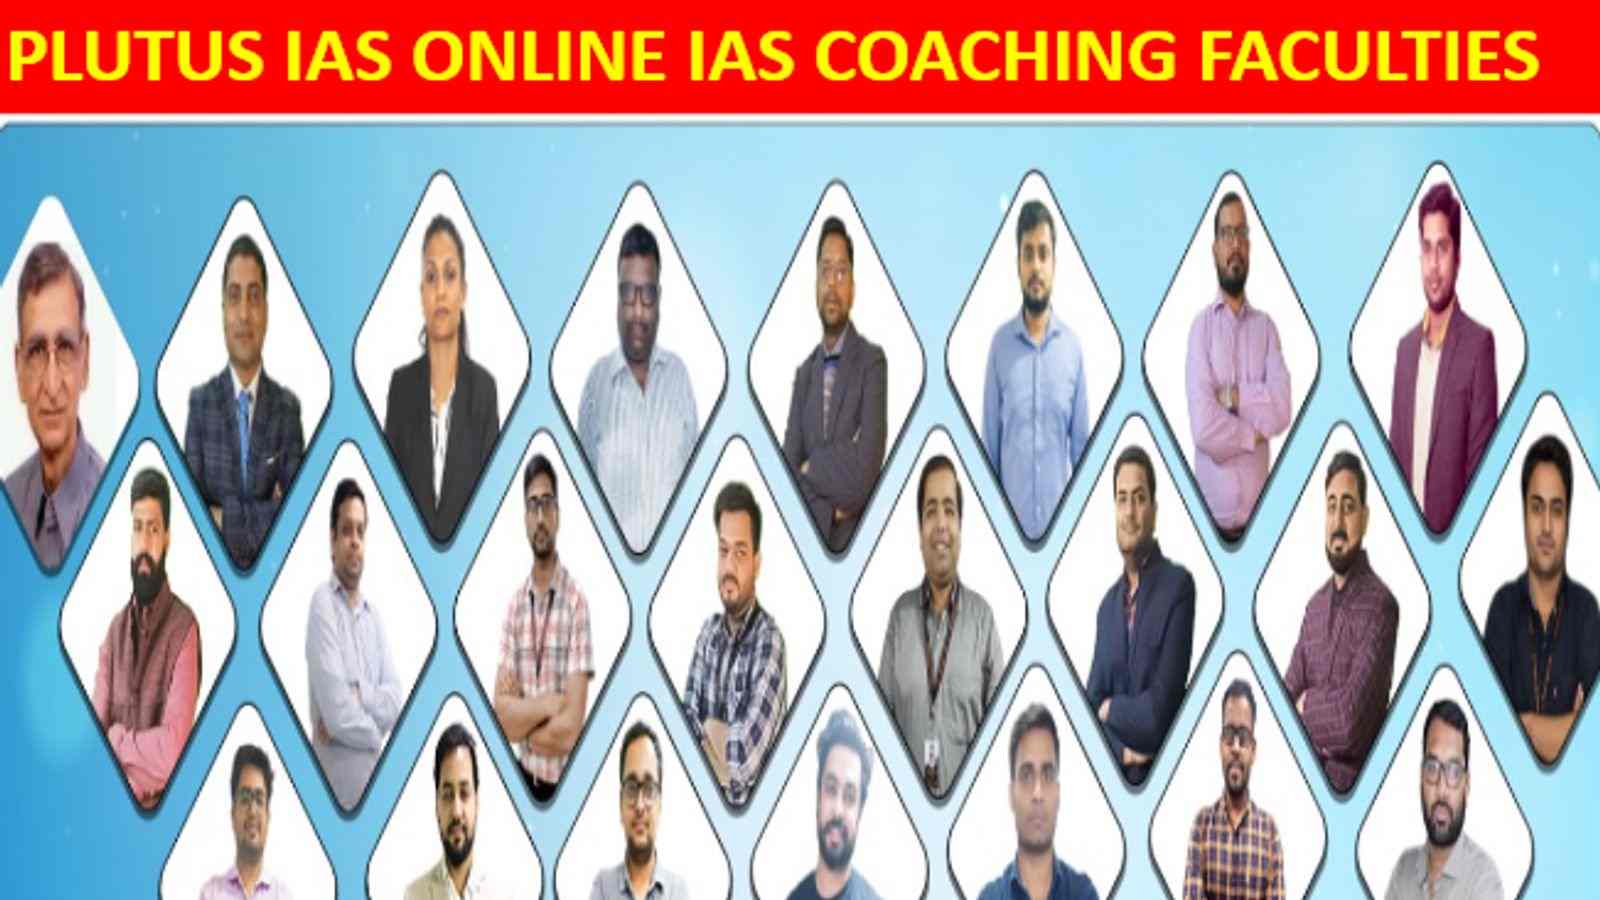 Plutus IAS Online Coaching Faculties